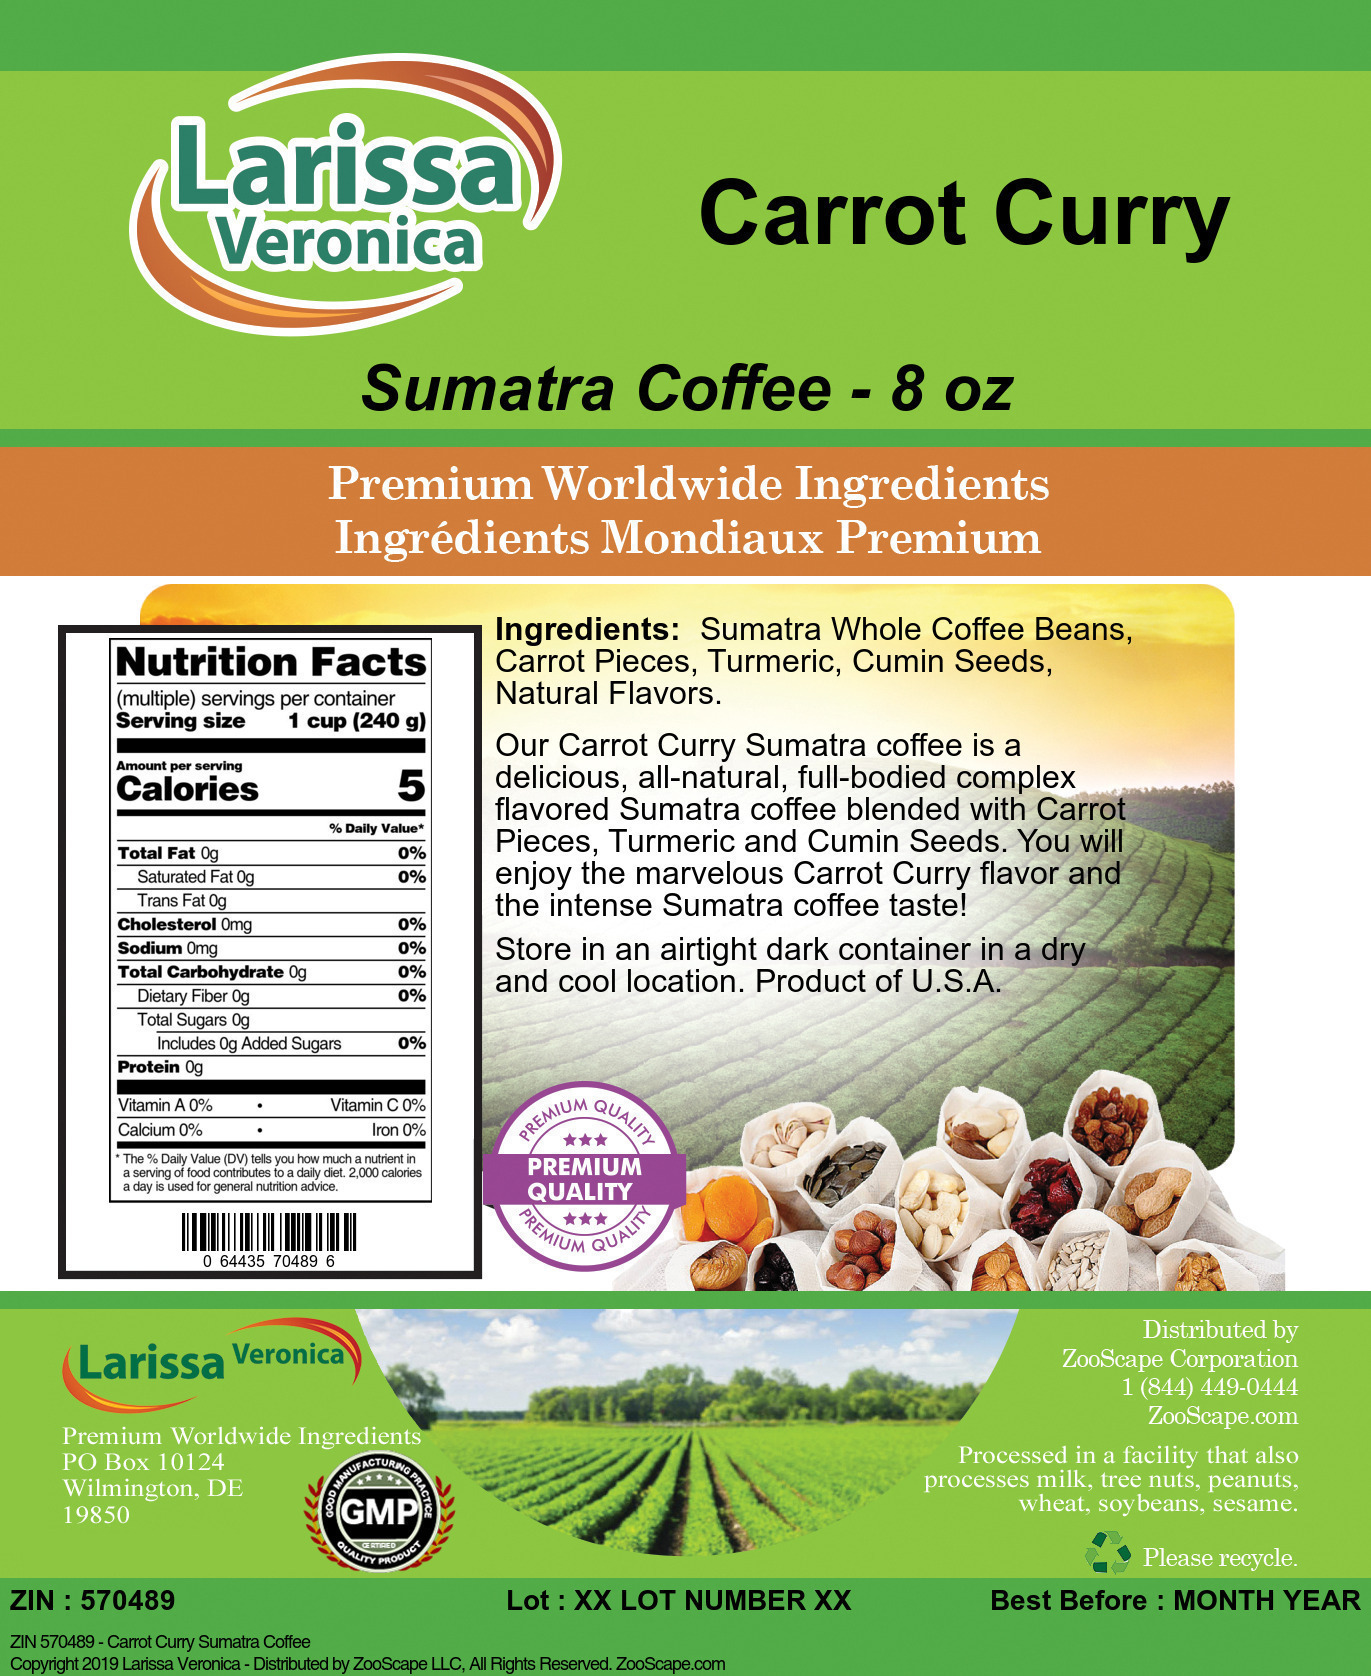 Carrot Curry Sumatra Coffee - Label